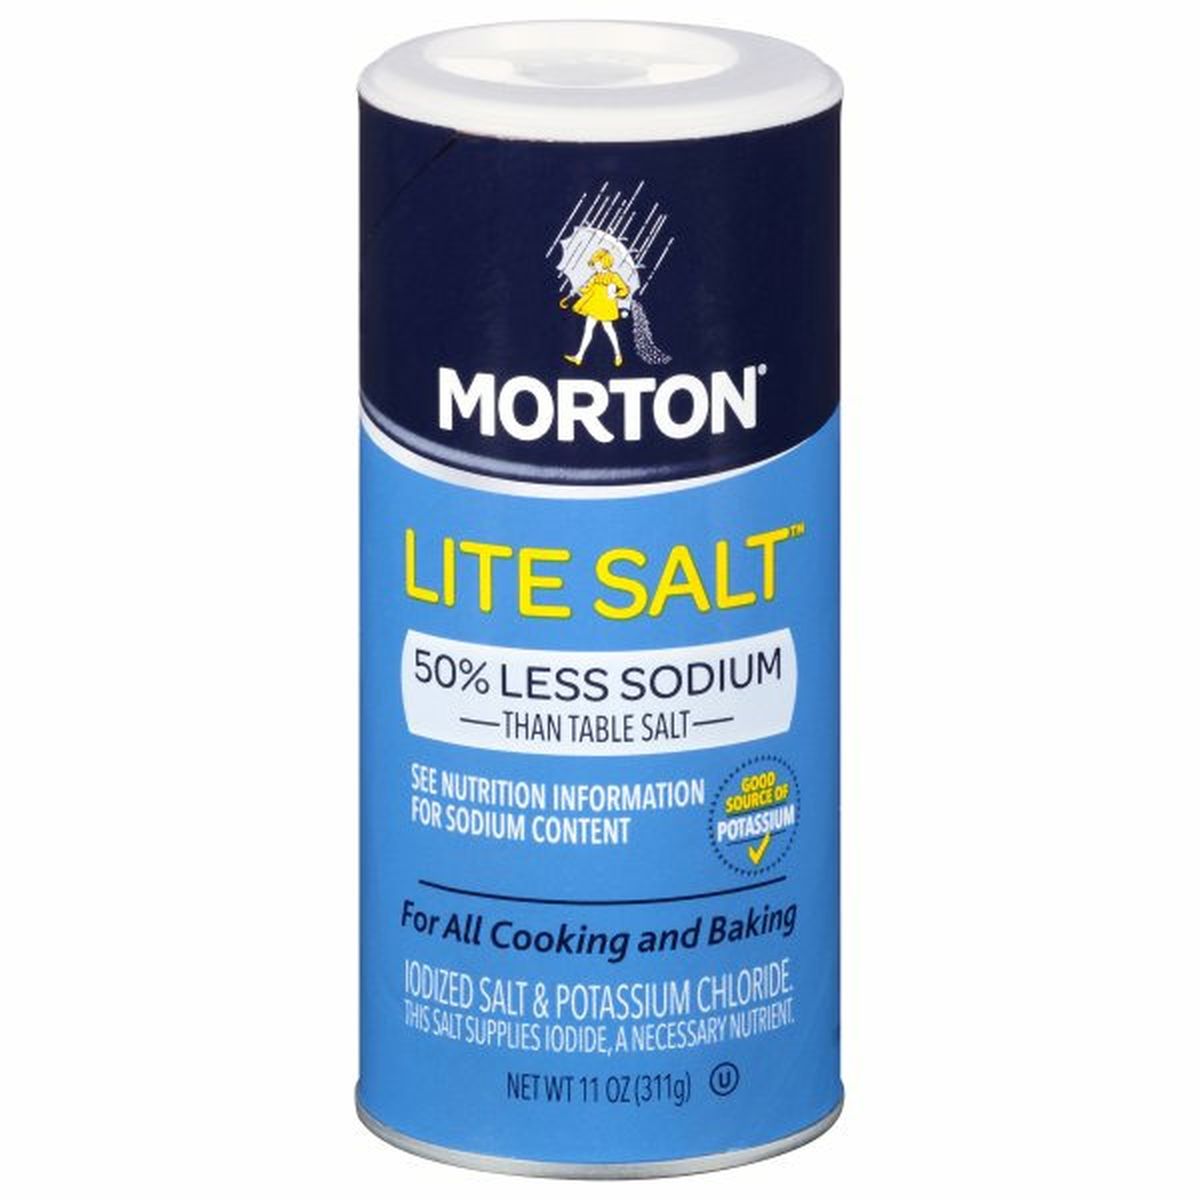 Calories in Morton Lite Salt